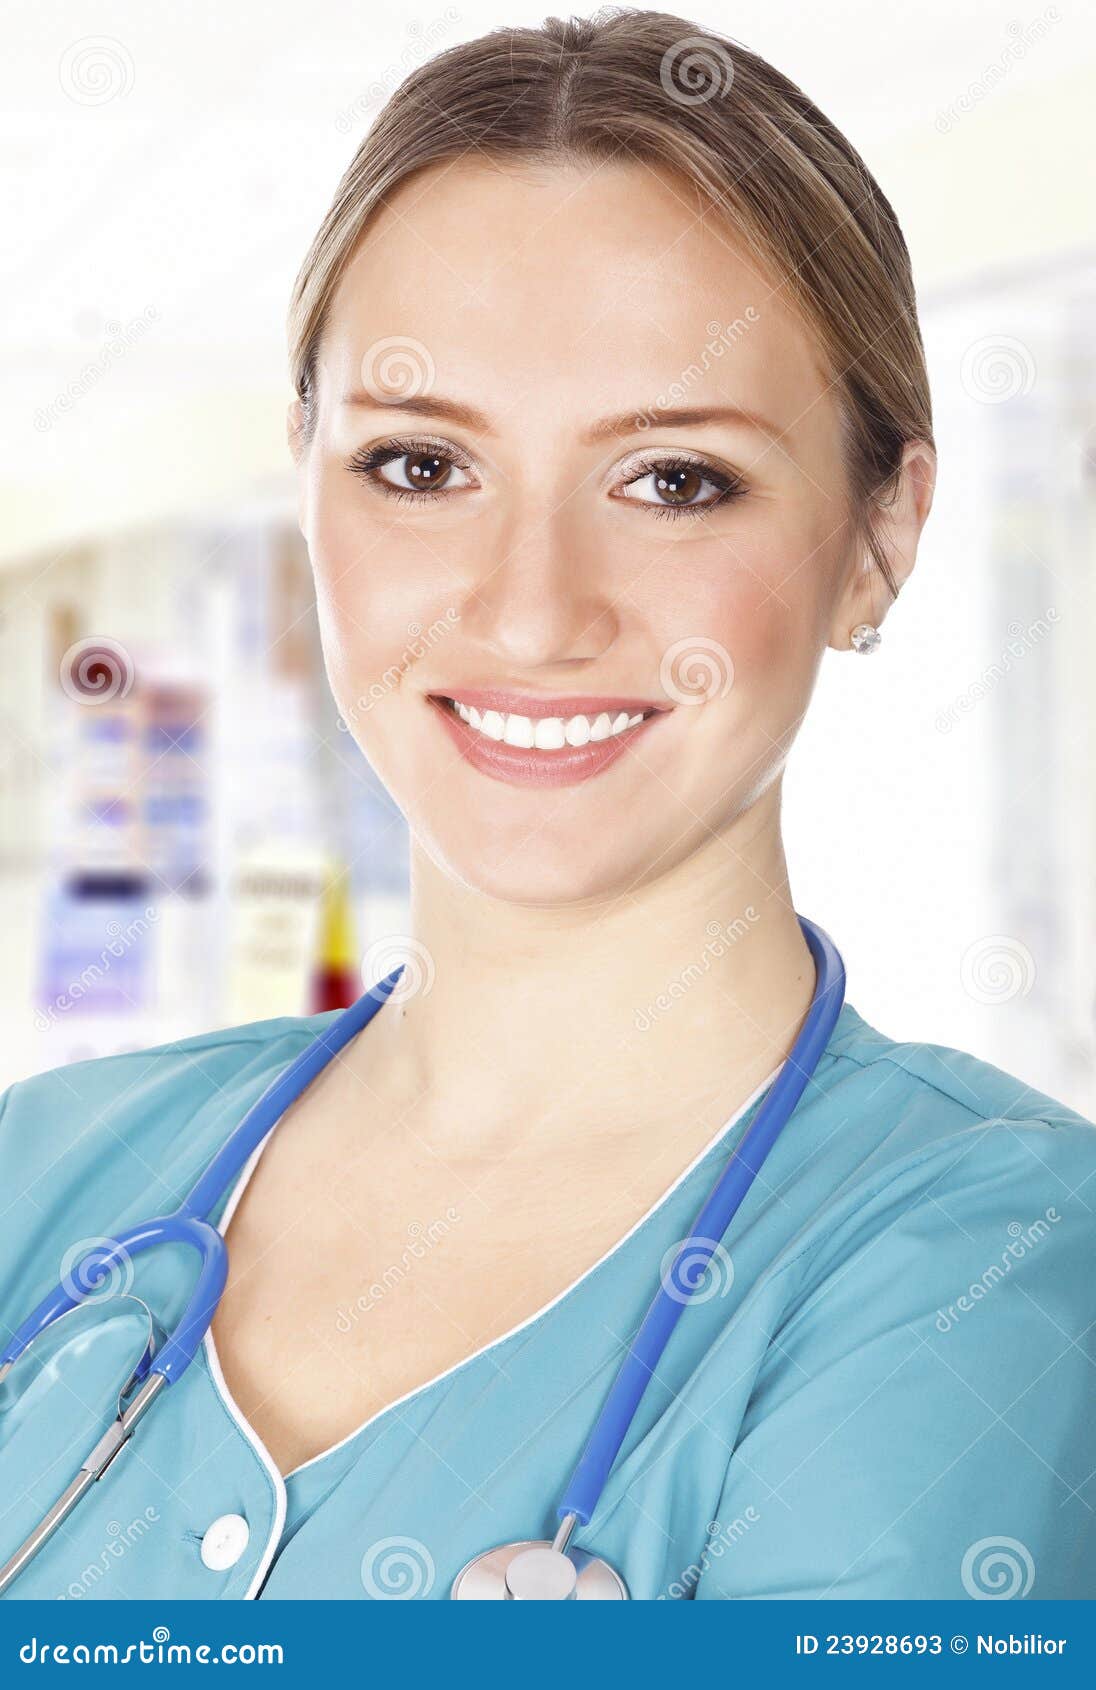 Headshot Of A Female Doctor Stock Photos Image 23928693